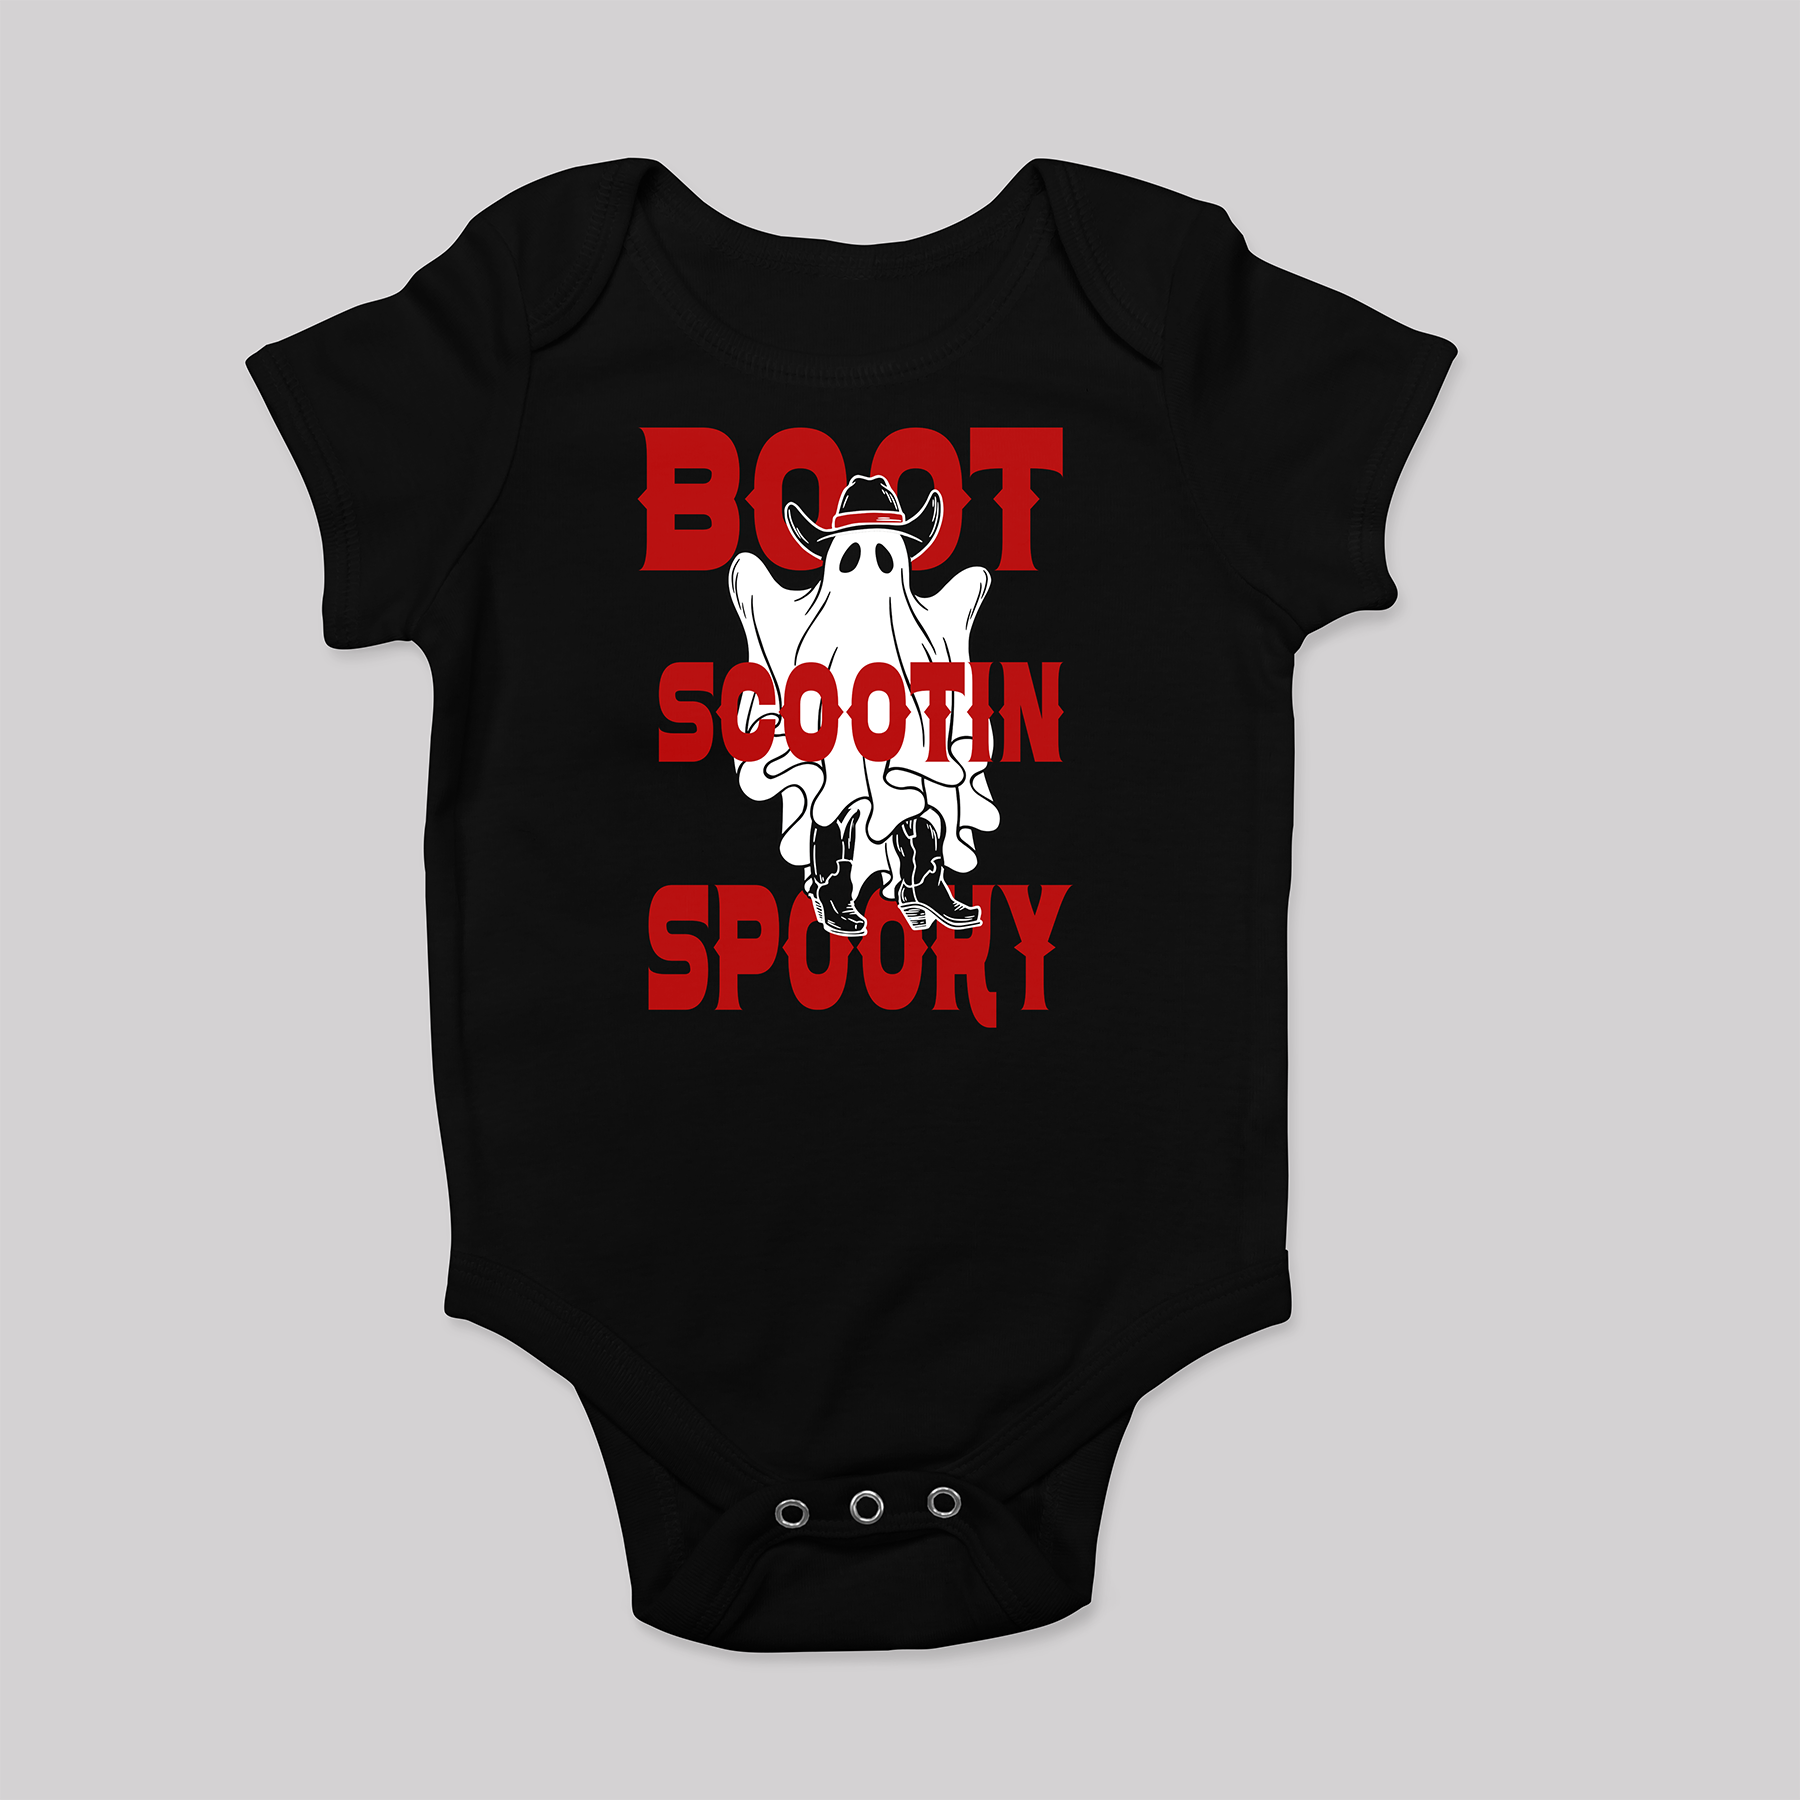 Boot Scootin Spooky Bodysuit for Babies